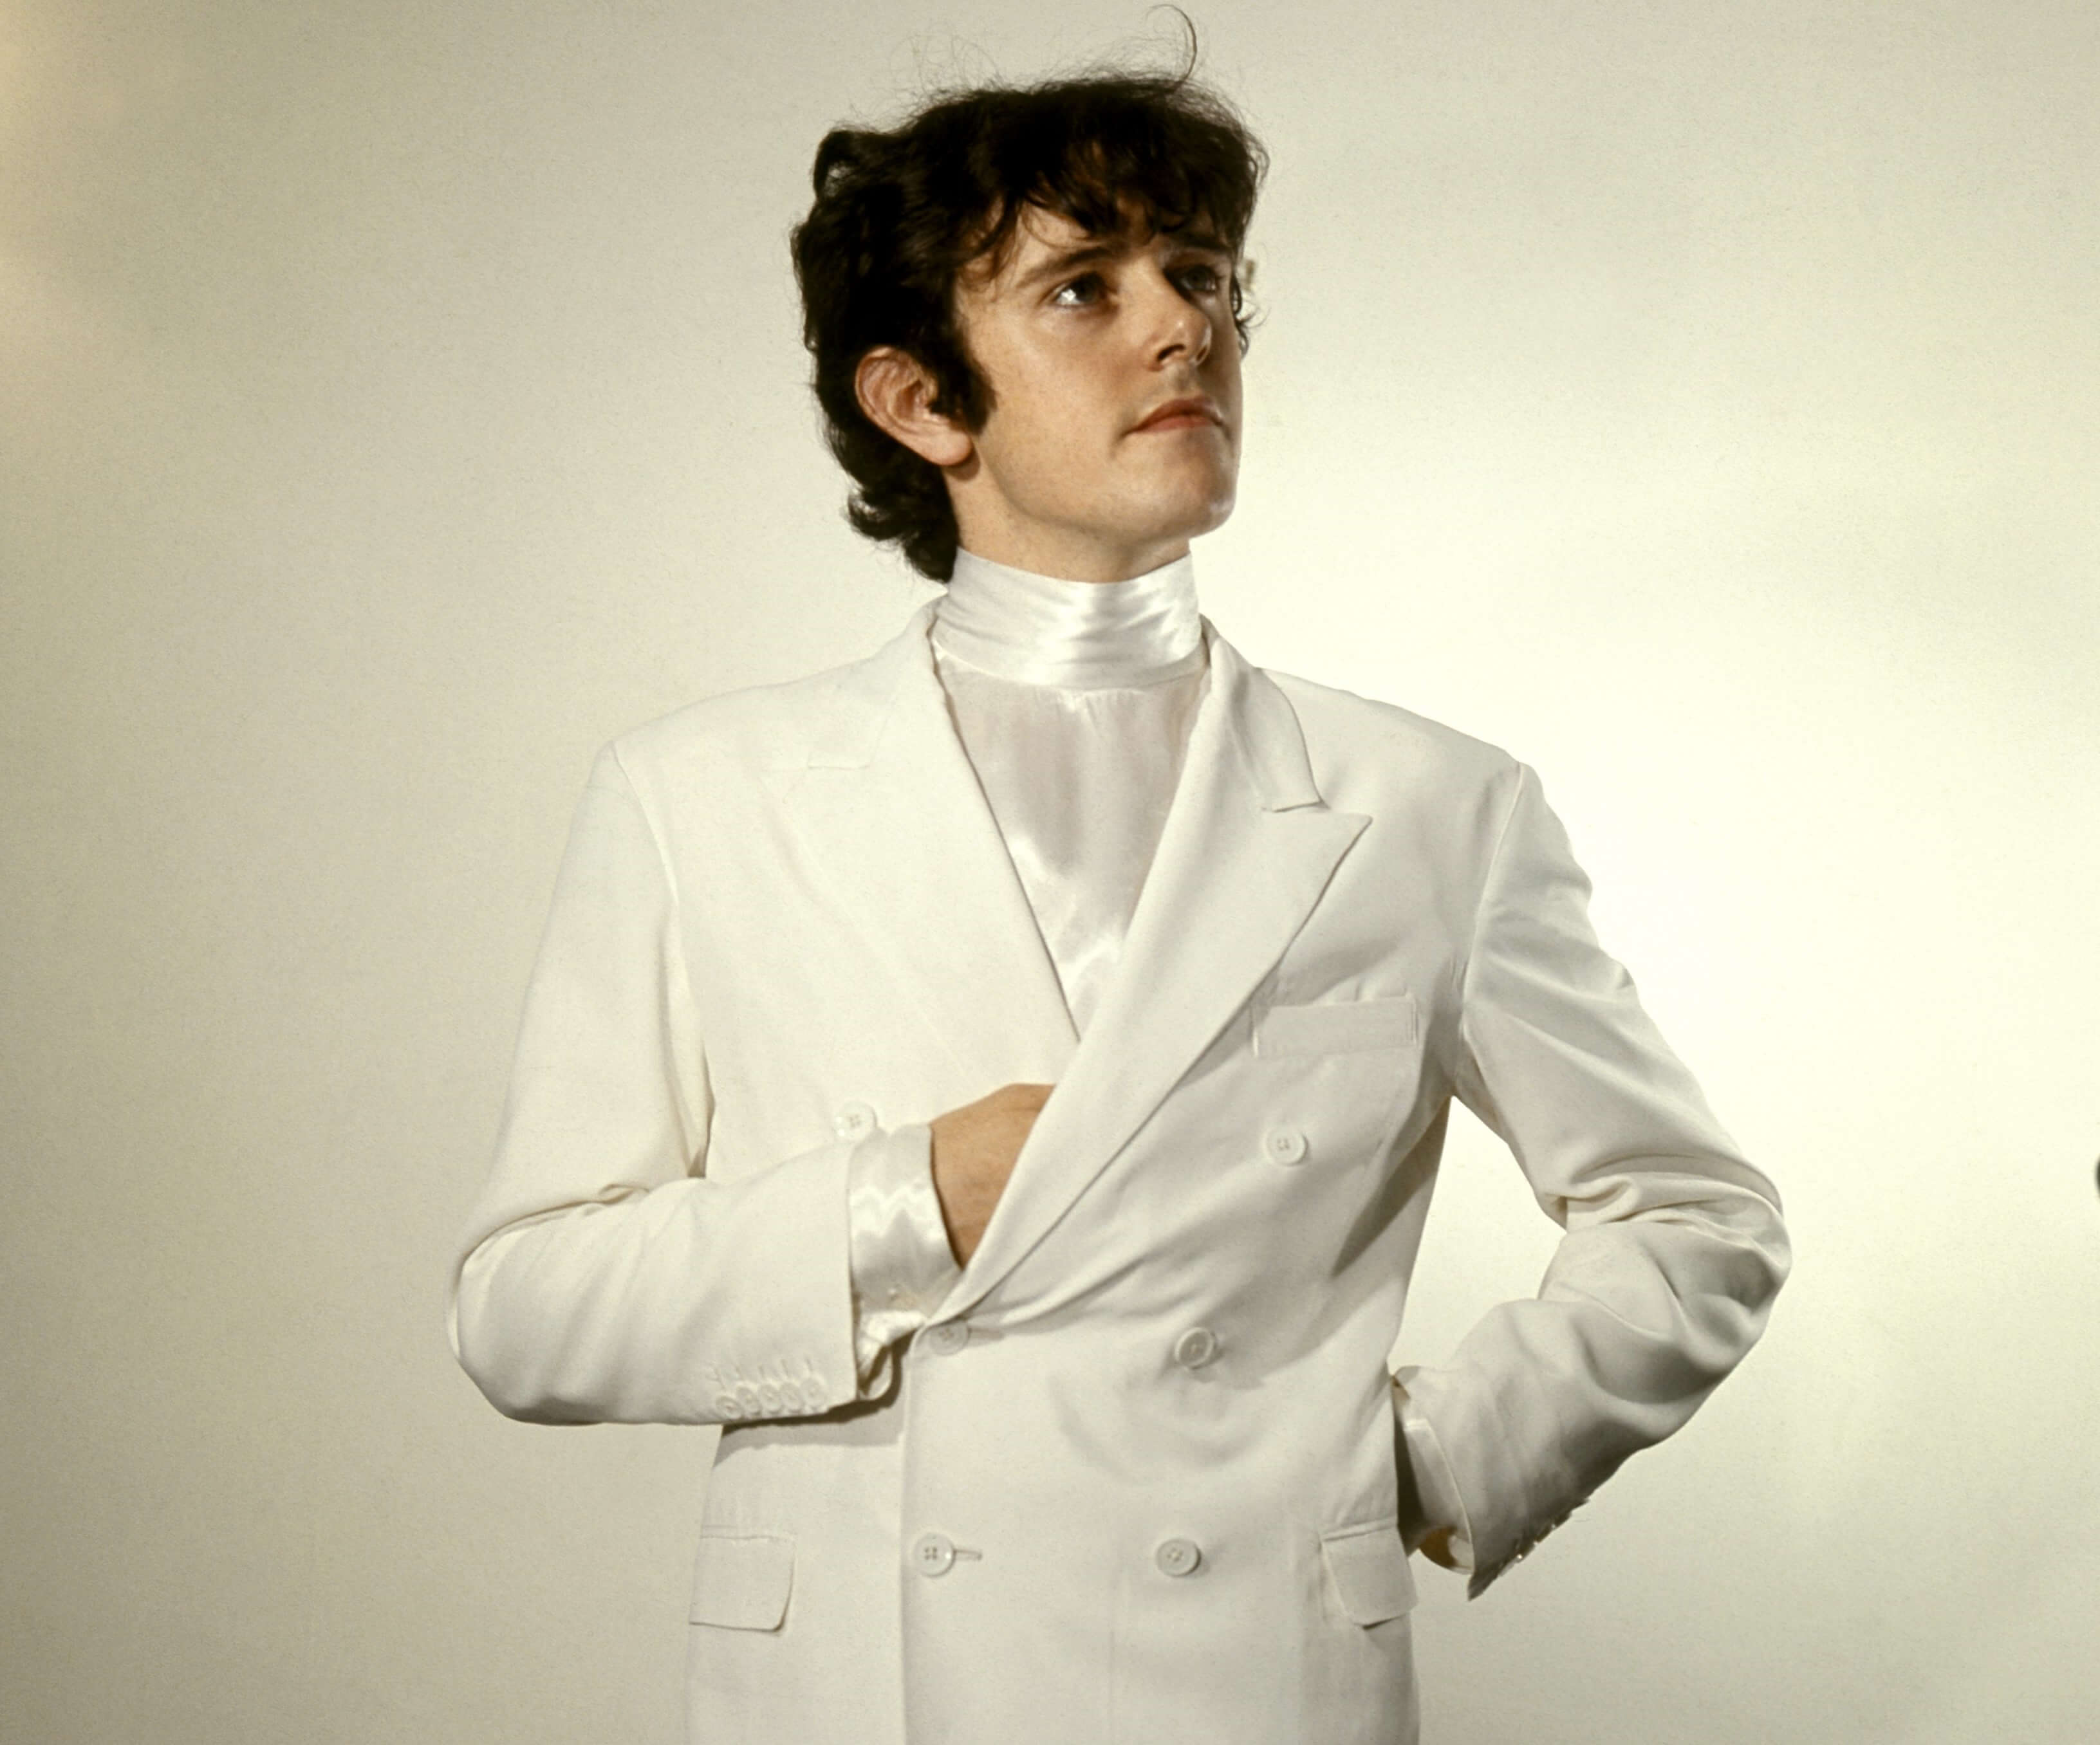 "Atlantis" singer Donovan in a white suit jacket